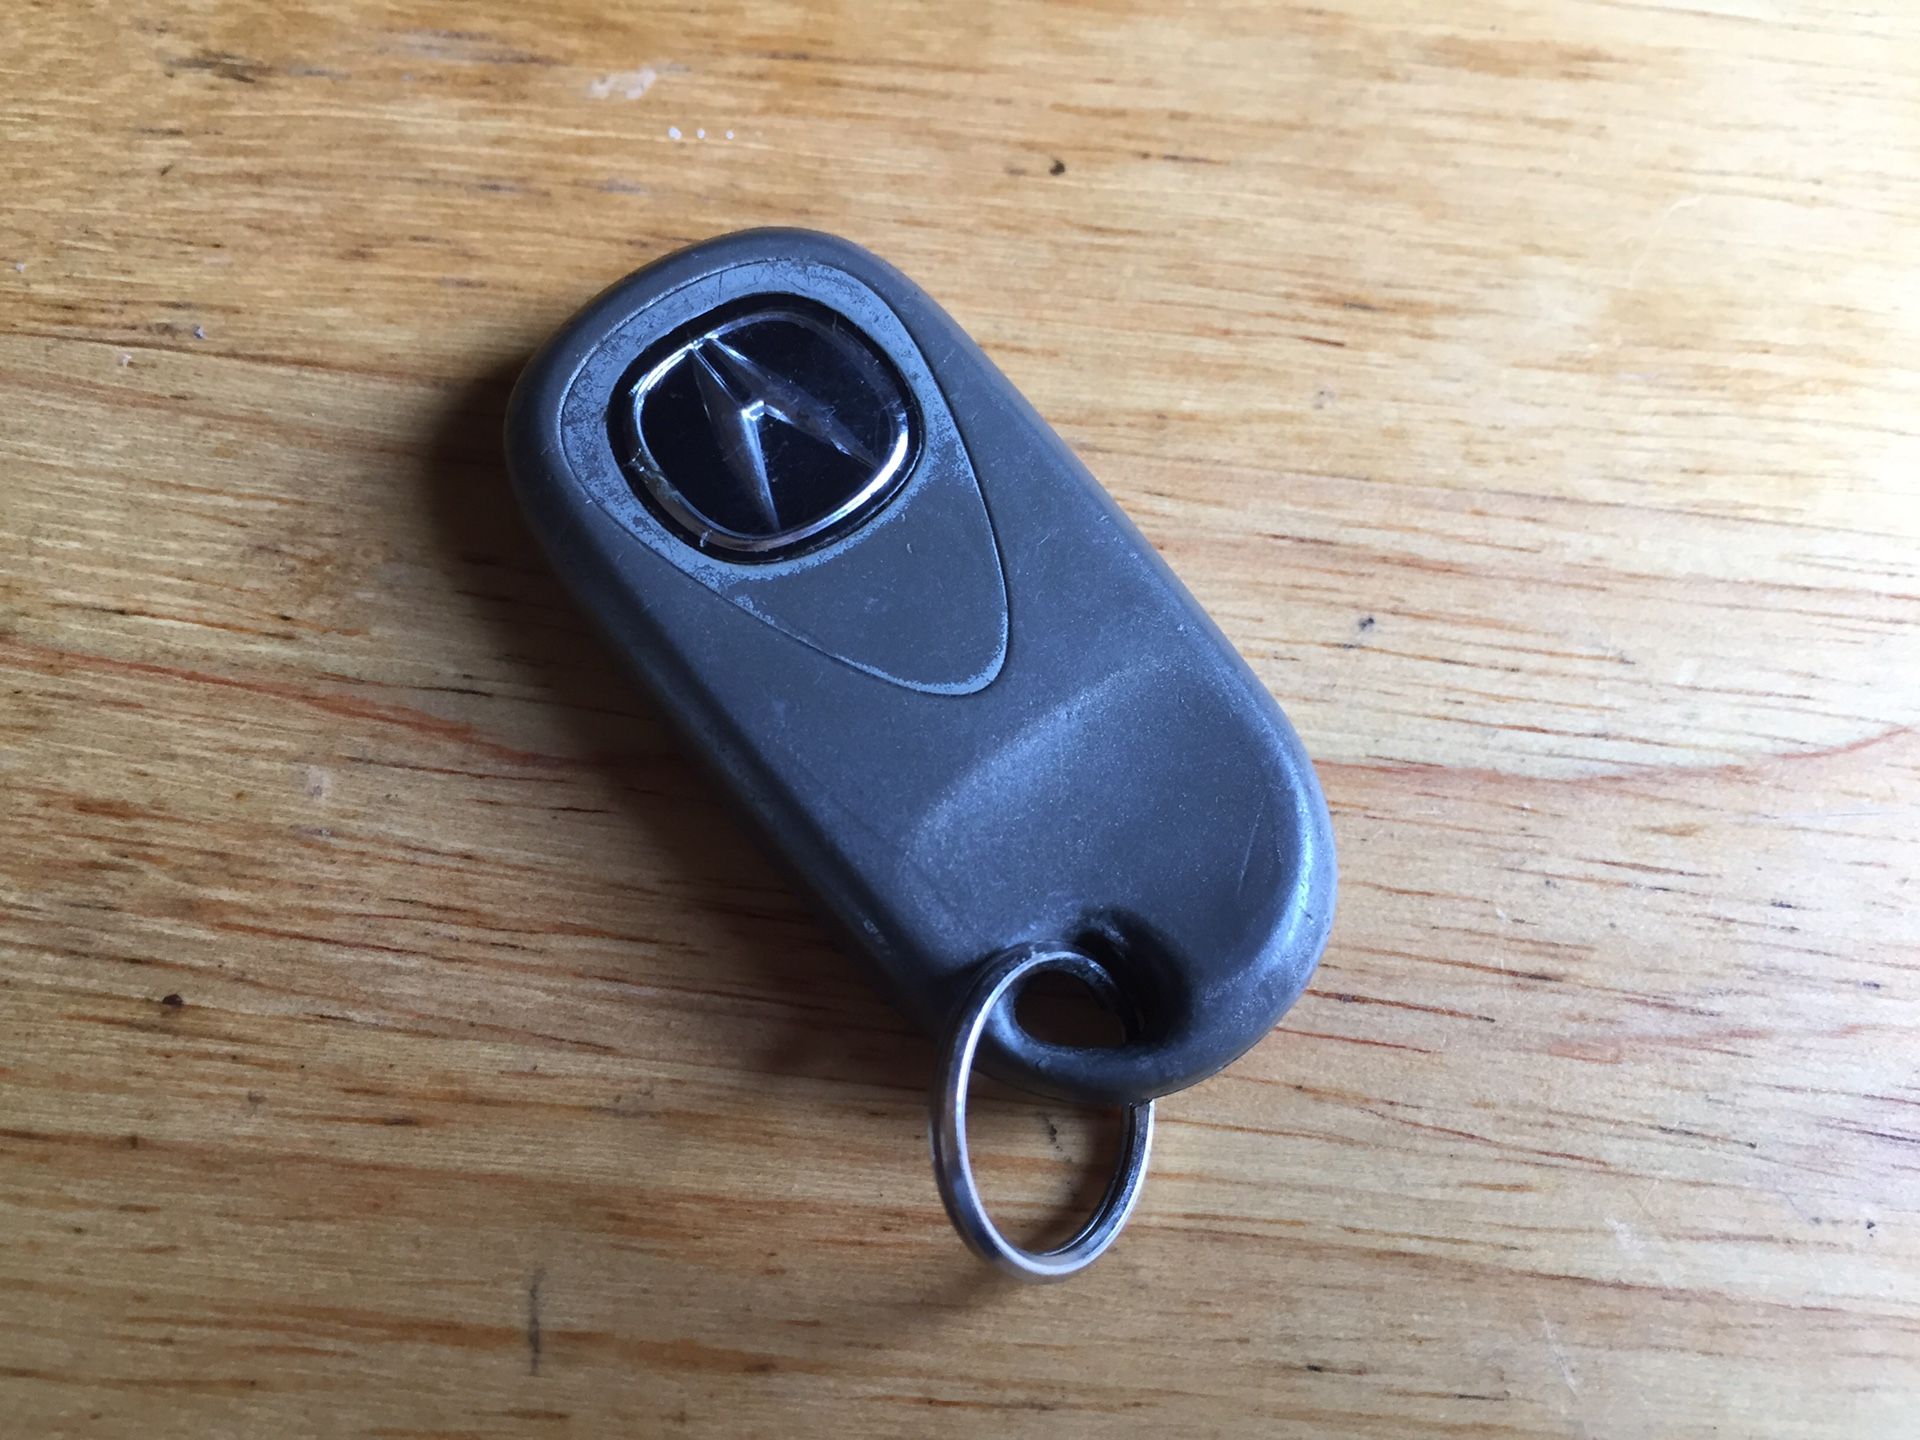 Oem Acura/Honda remote alarm key fob